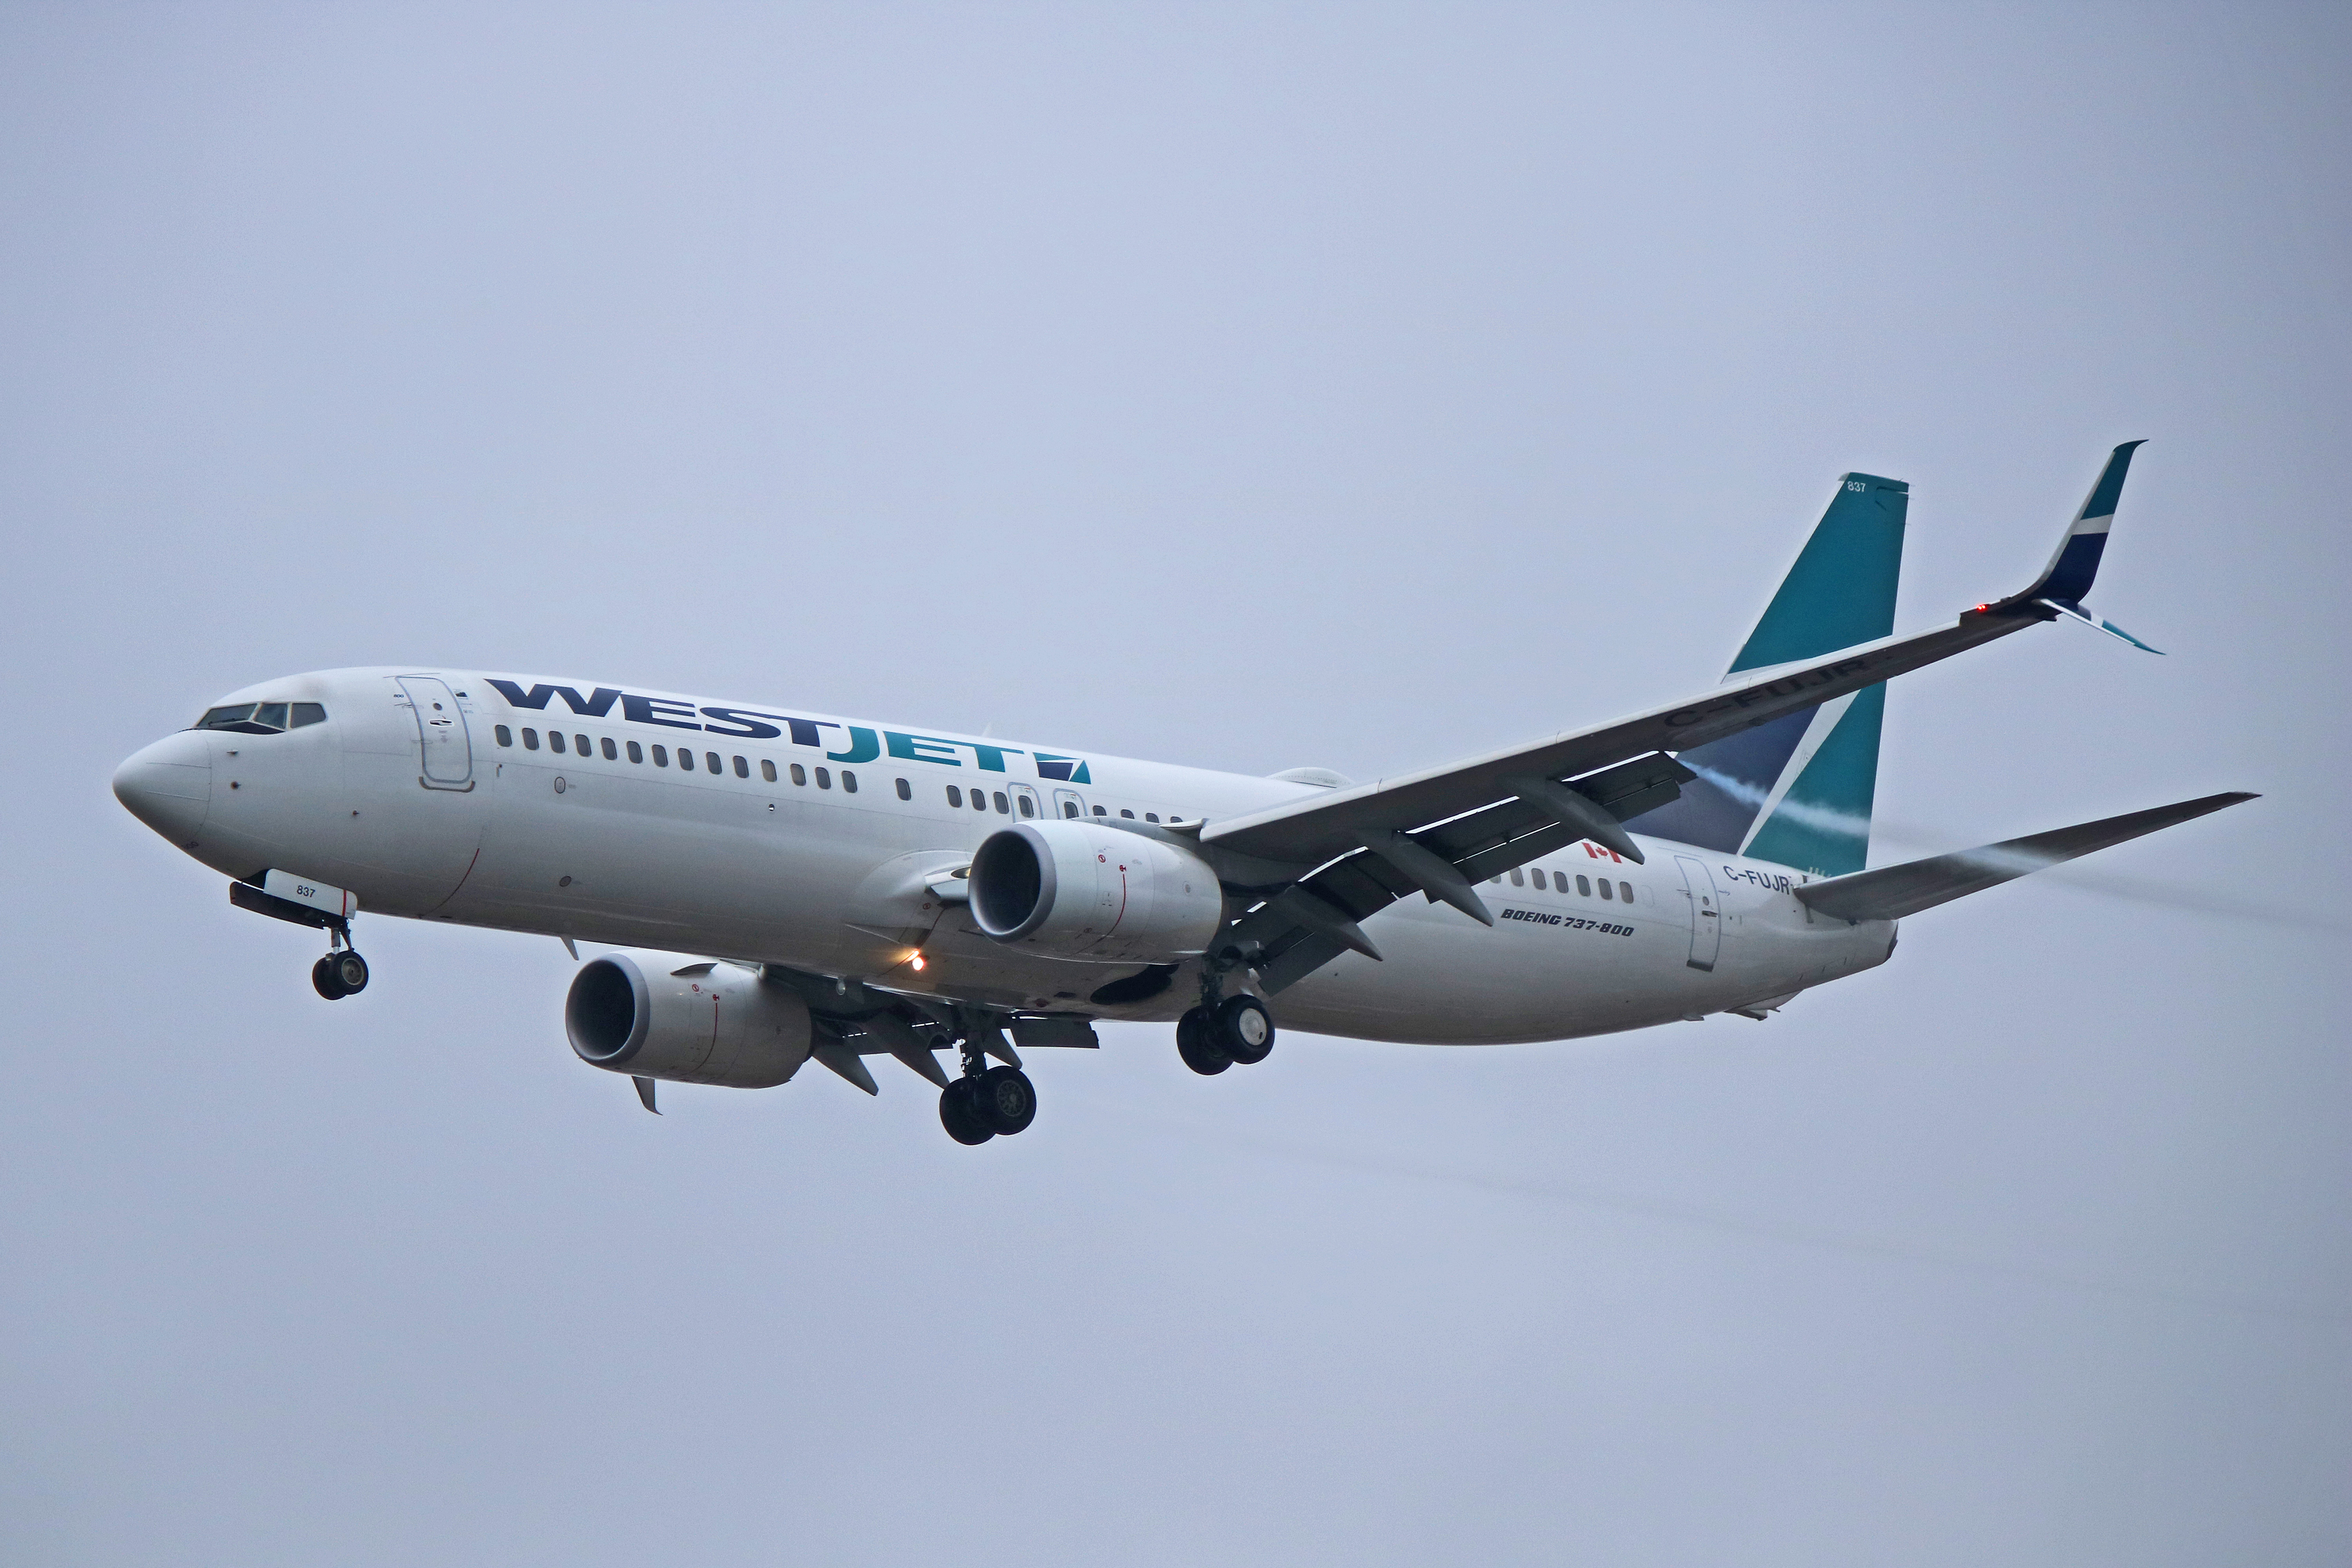 c-fujr westjet airlines boeing 737-800 toronto pearson yyz